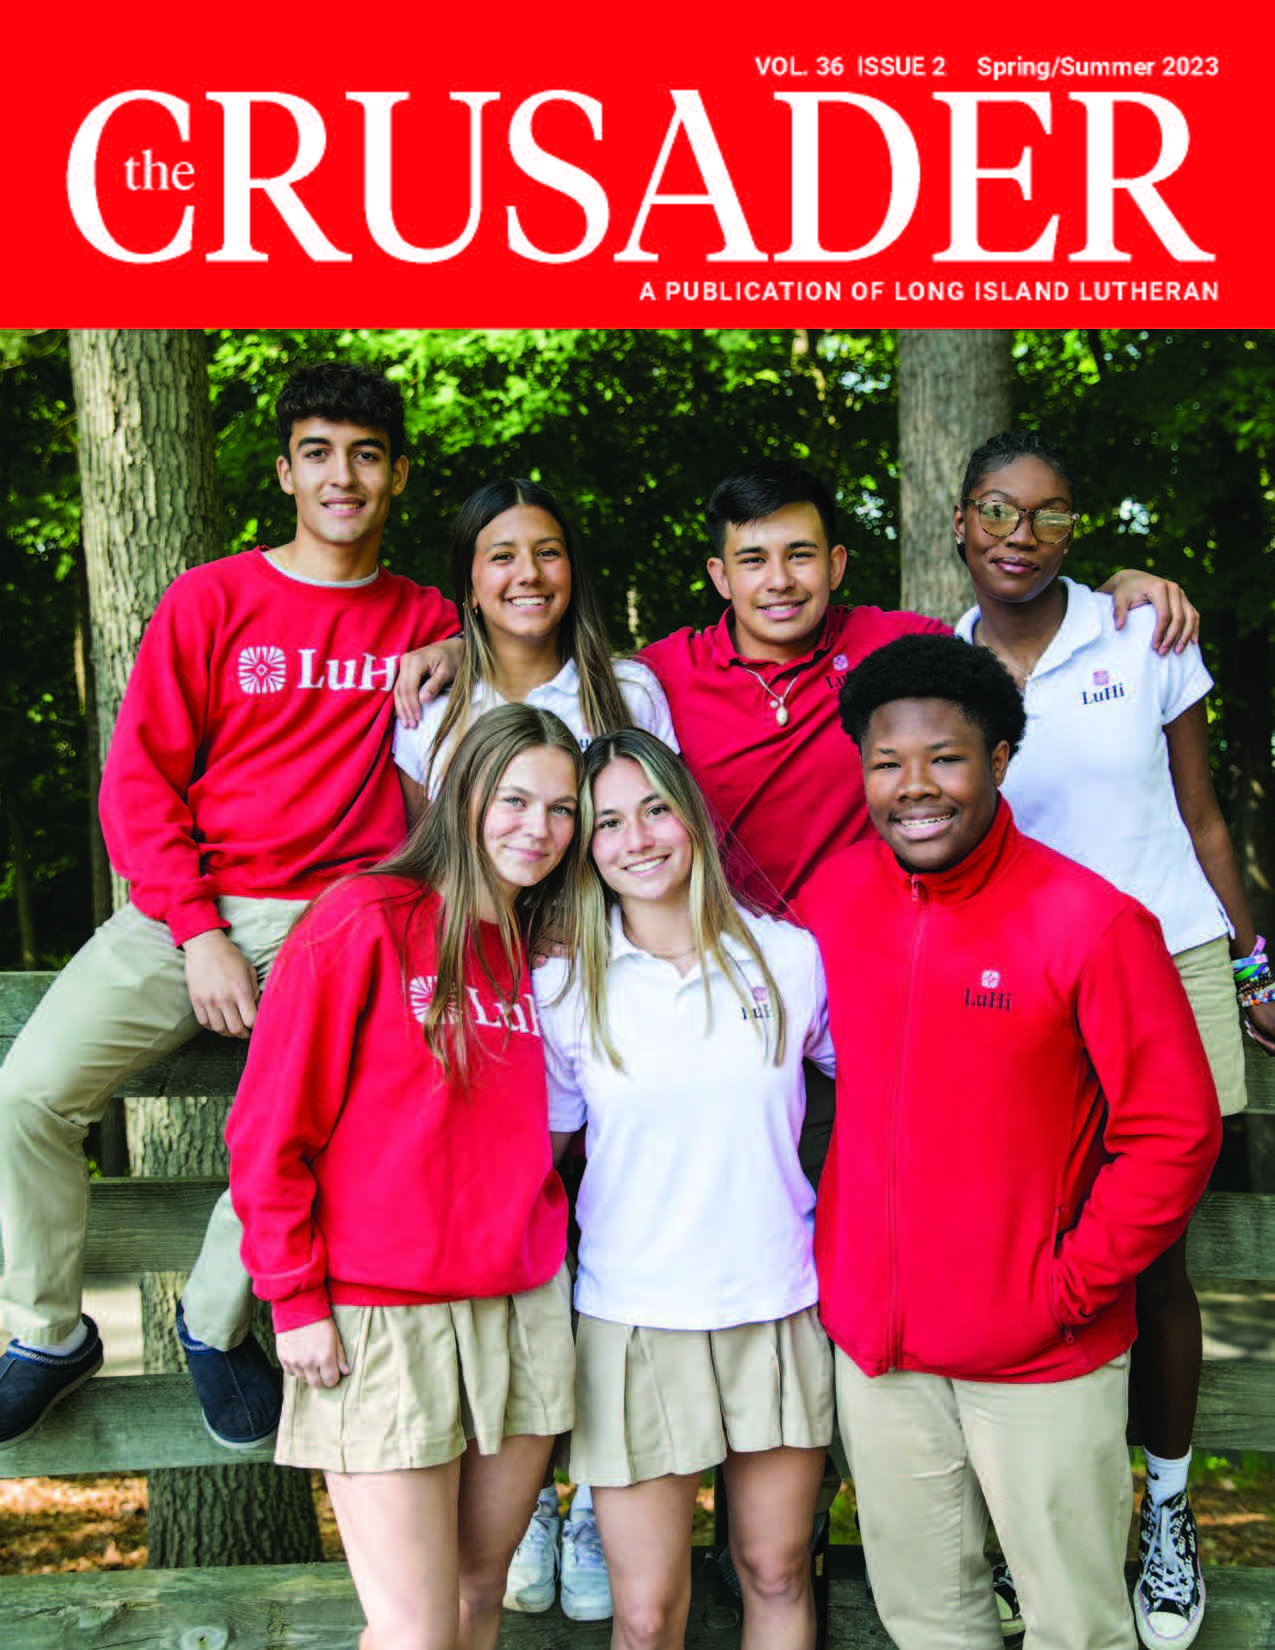 LuHi Crusader Magazine Cover